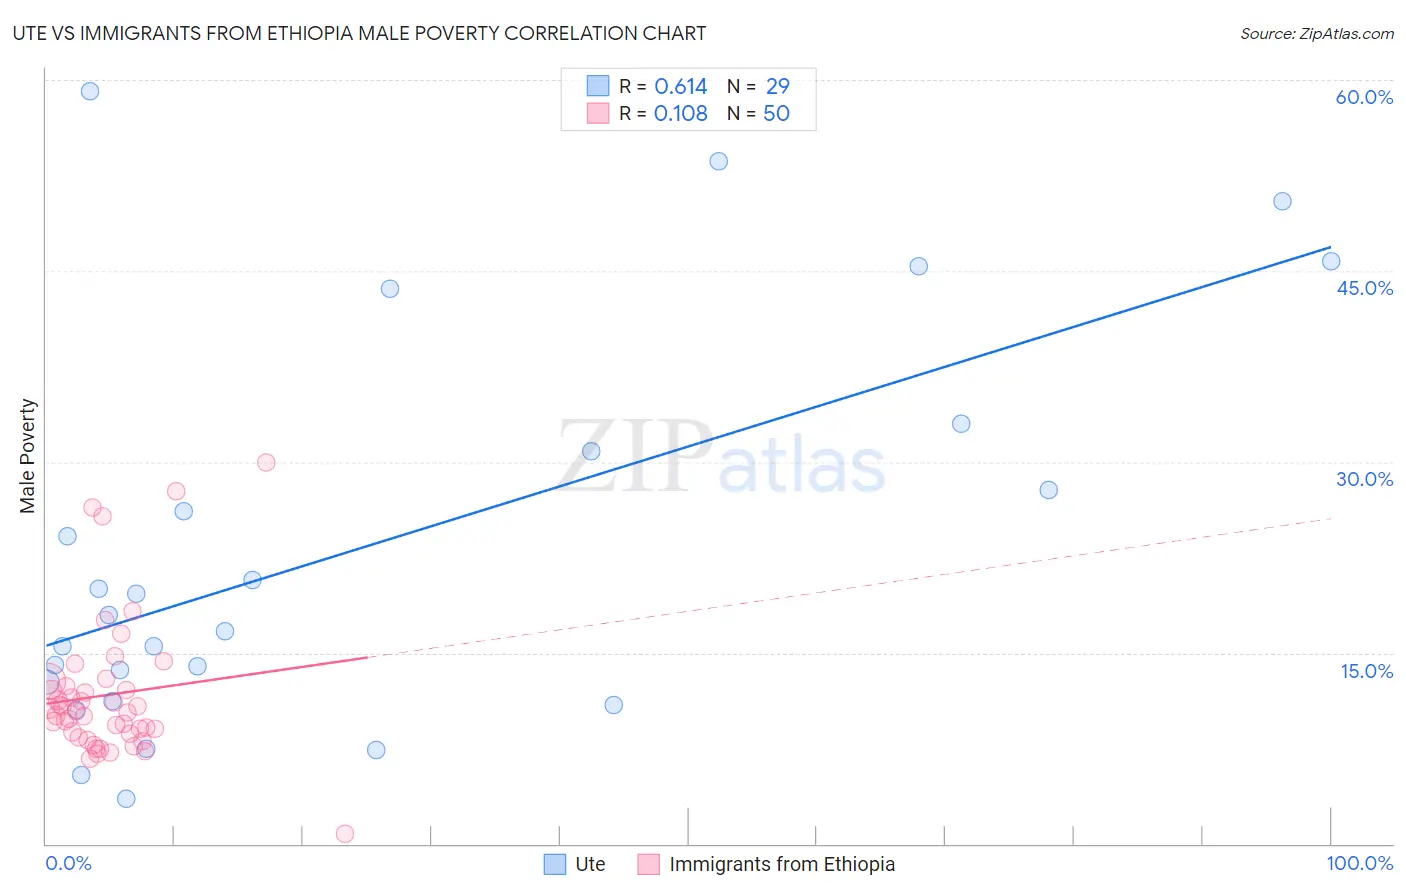 Ute vs Immigrants from Ethiopia Male Poverty